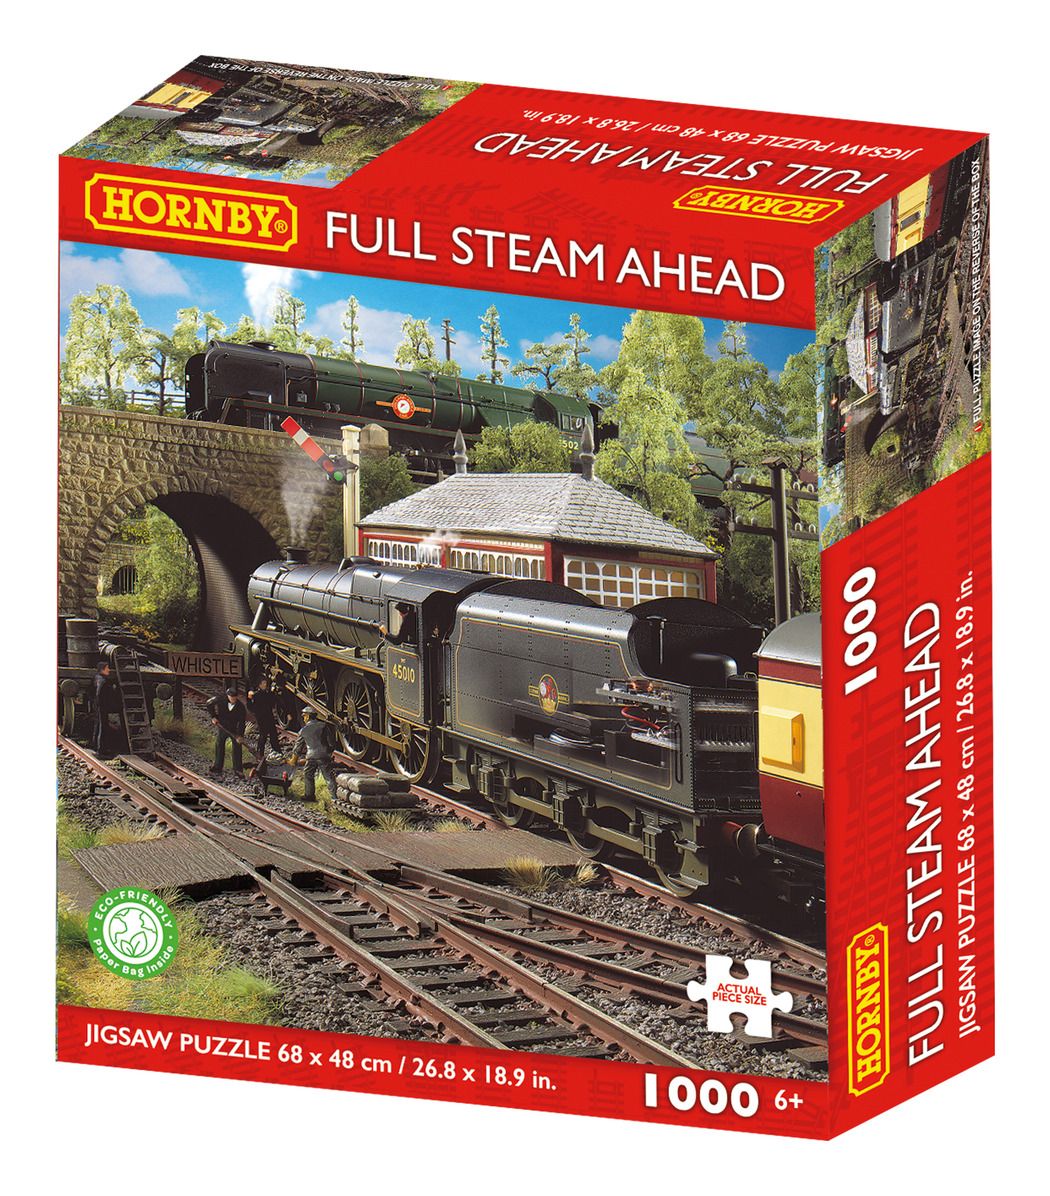 Kidicraft - Hornby Full Steam Ahead - 1000 Piece Jigsaw Puzzle